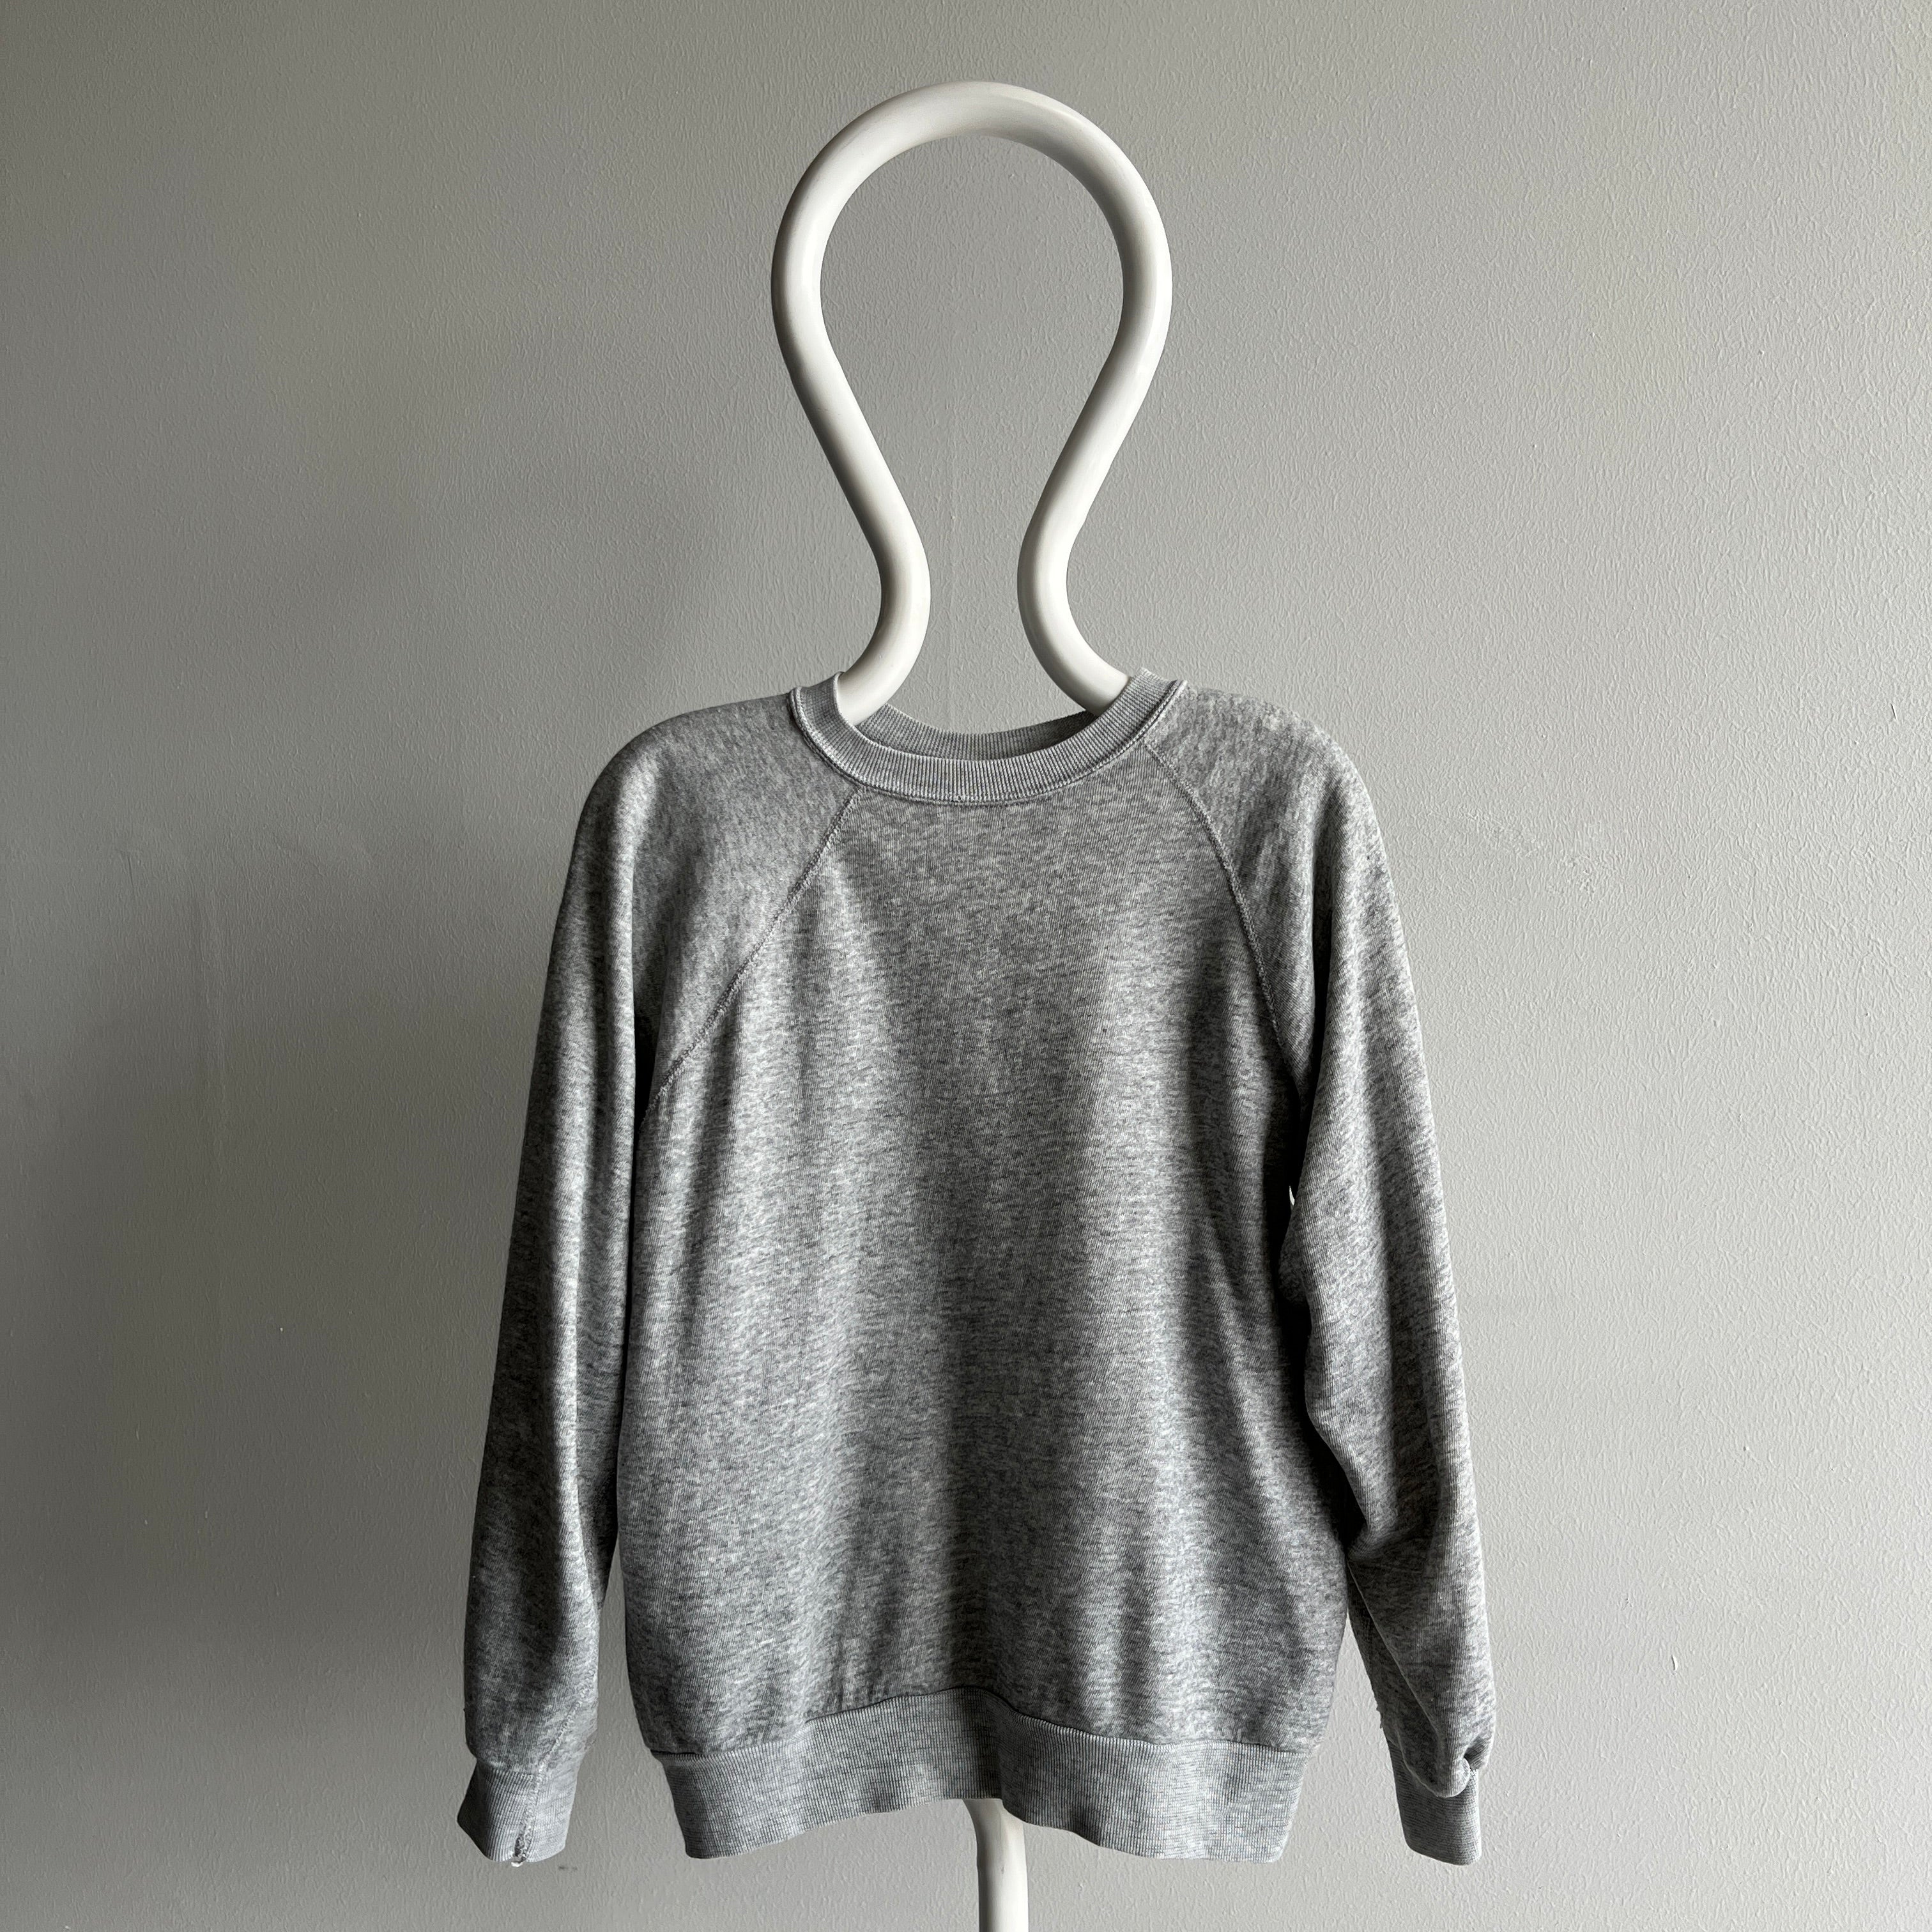 1980s Blank Gray Sweatshirt with Bleach Staining - Swooooon